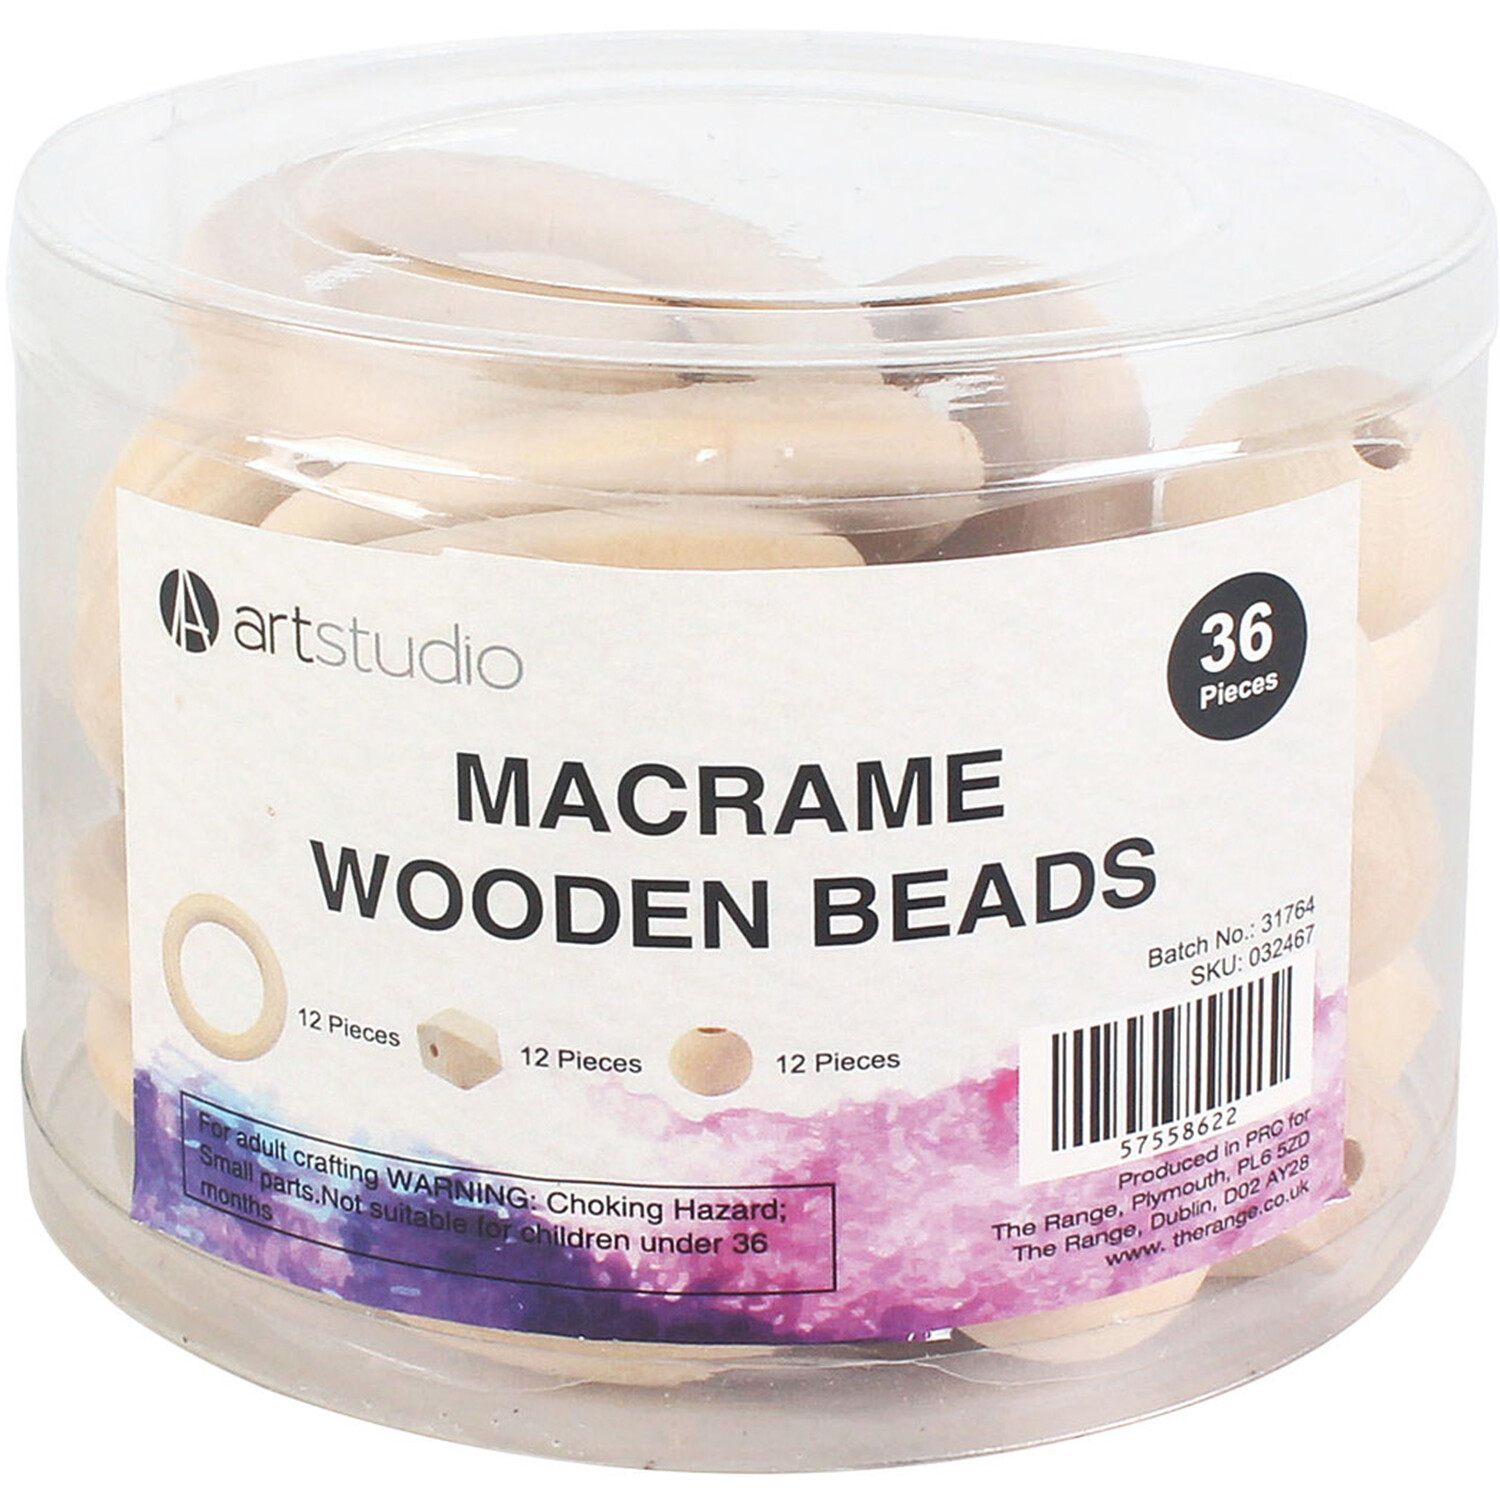 Art Studio Macrame Wooden Bead 36 Pack Image